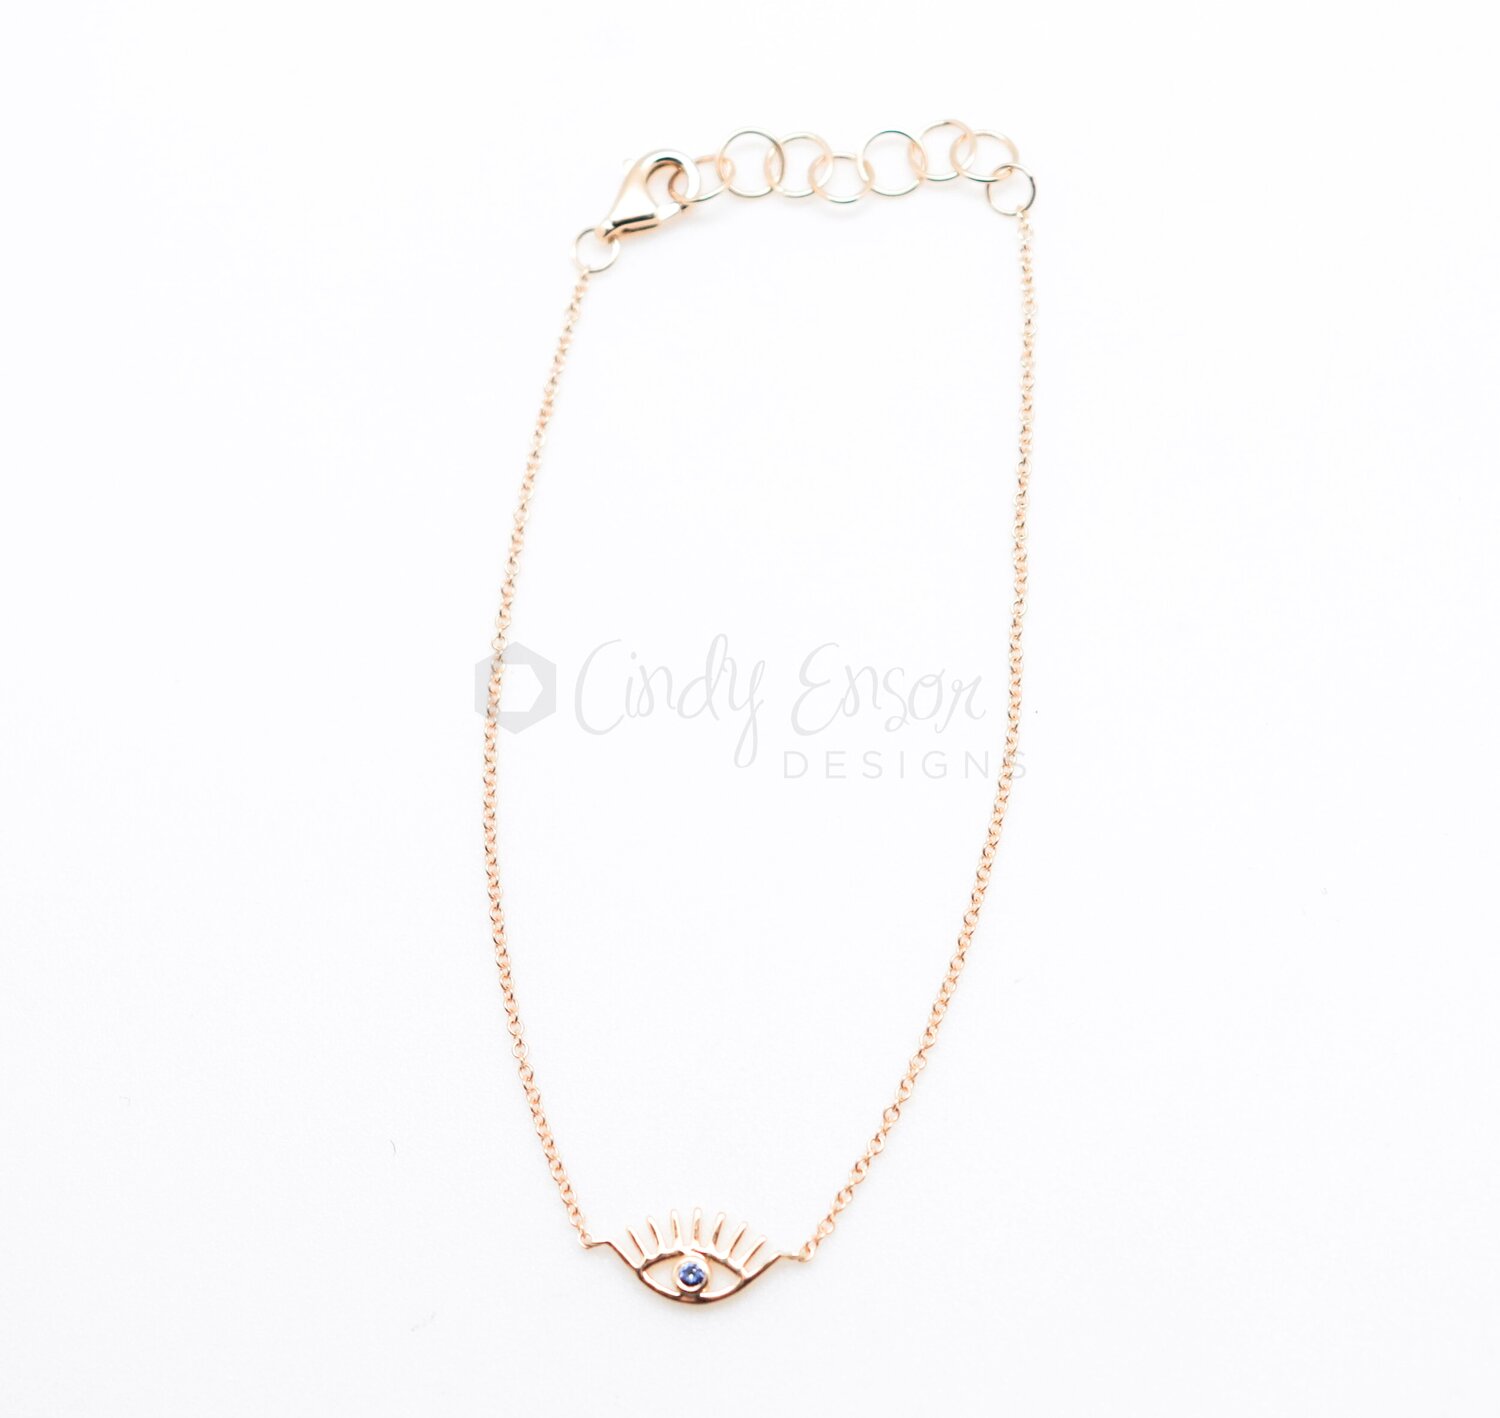 Single Pearl and Leather Bracelet — Cindy Ensor Designs